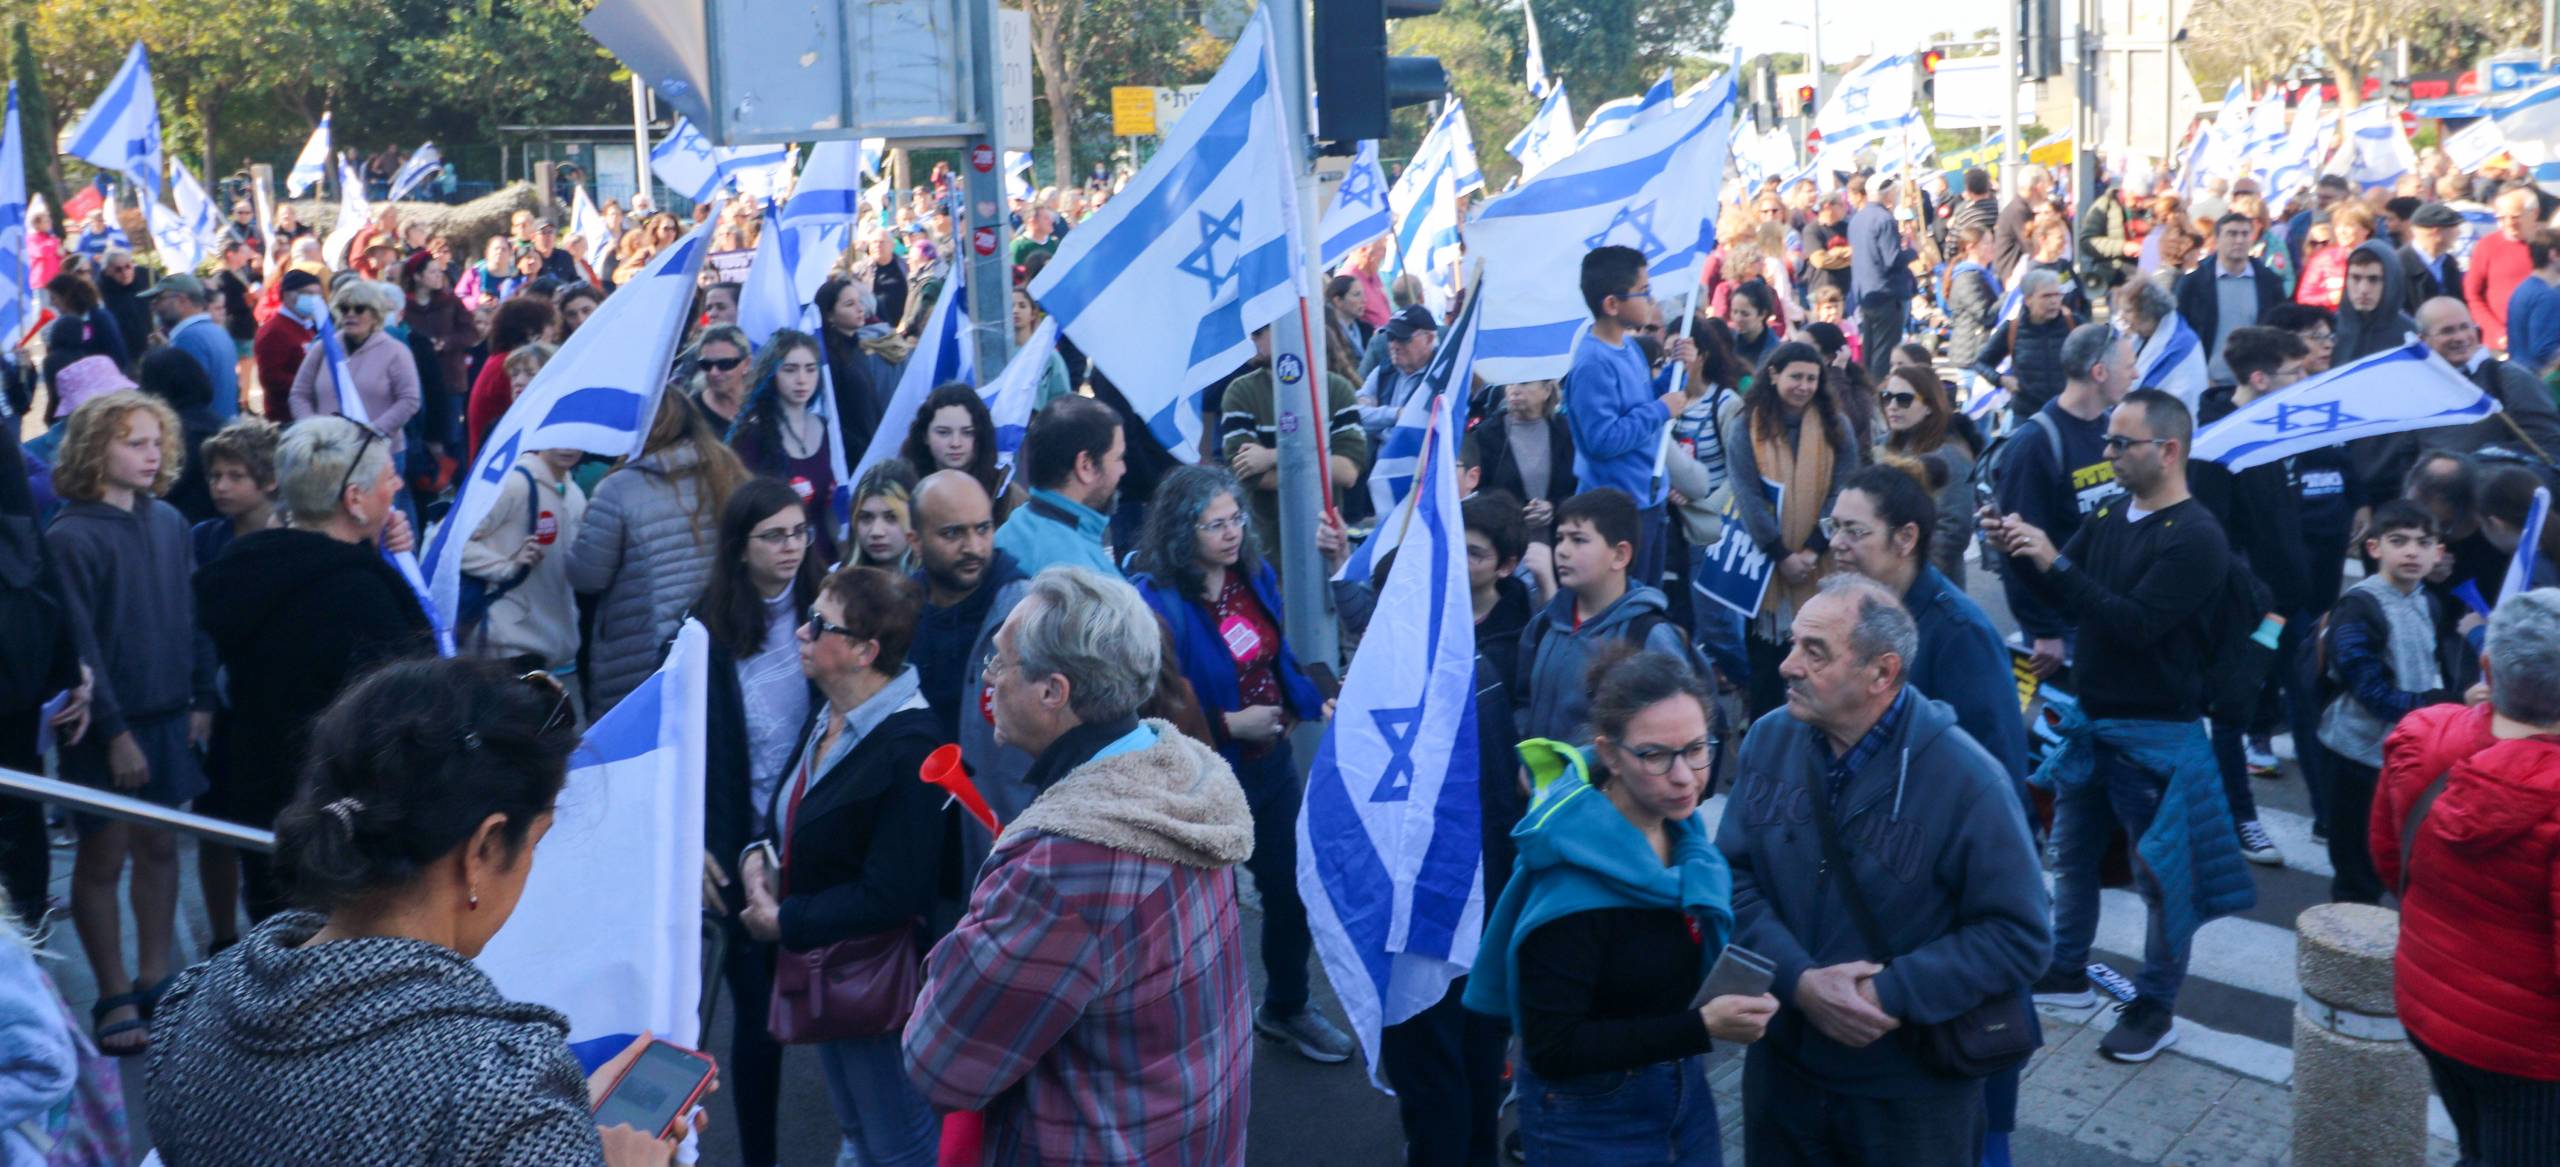 Media Release: Israelis Protest Proposed Judicial Reforms Amid Knesset Debate